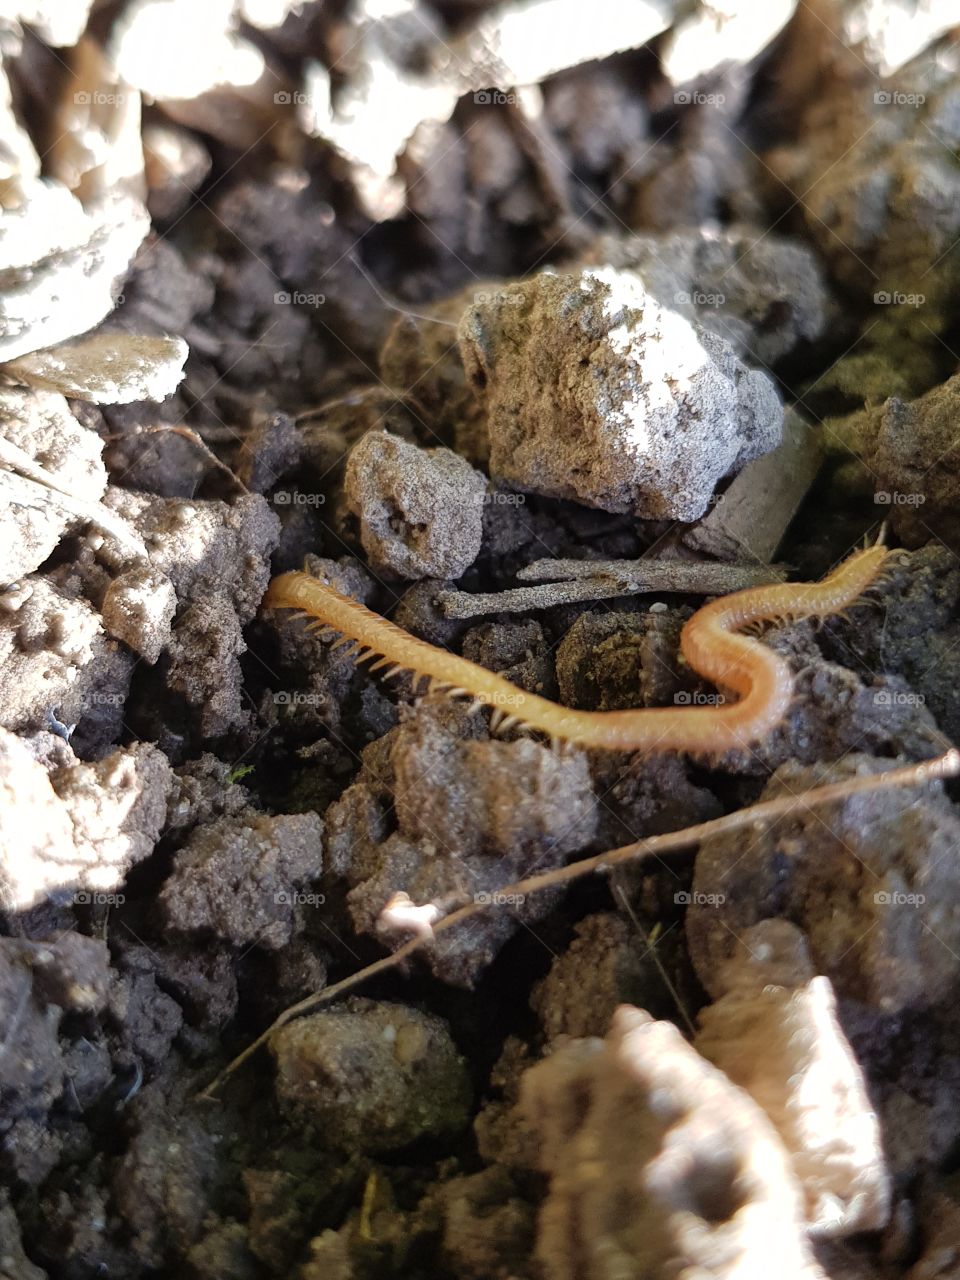 Centipede on rocks (worm)